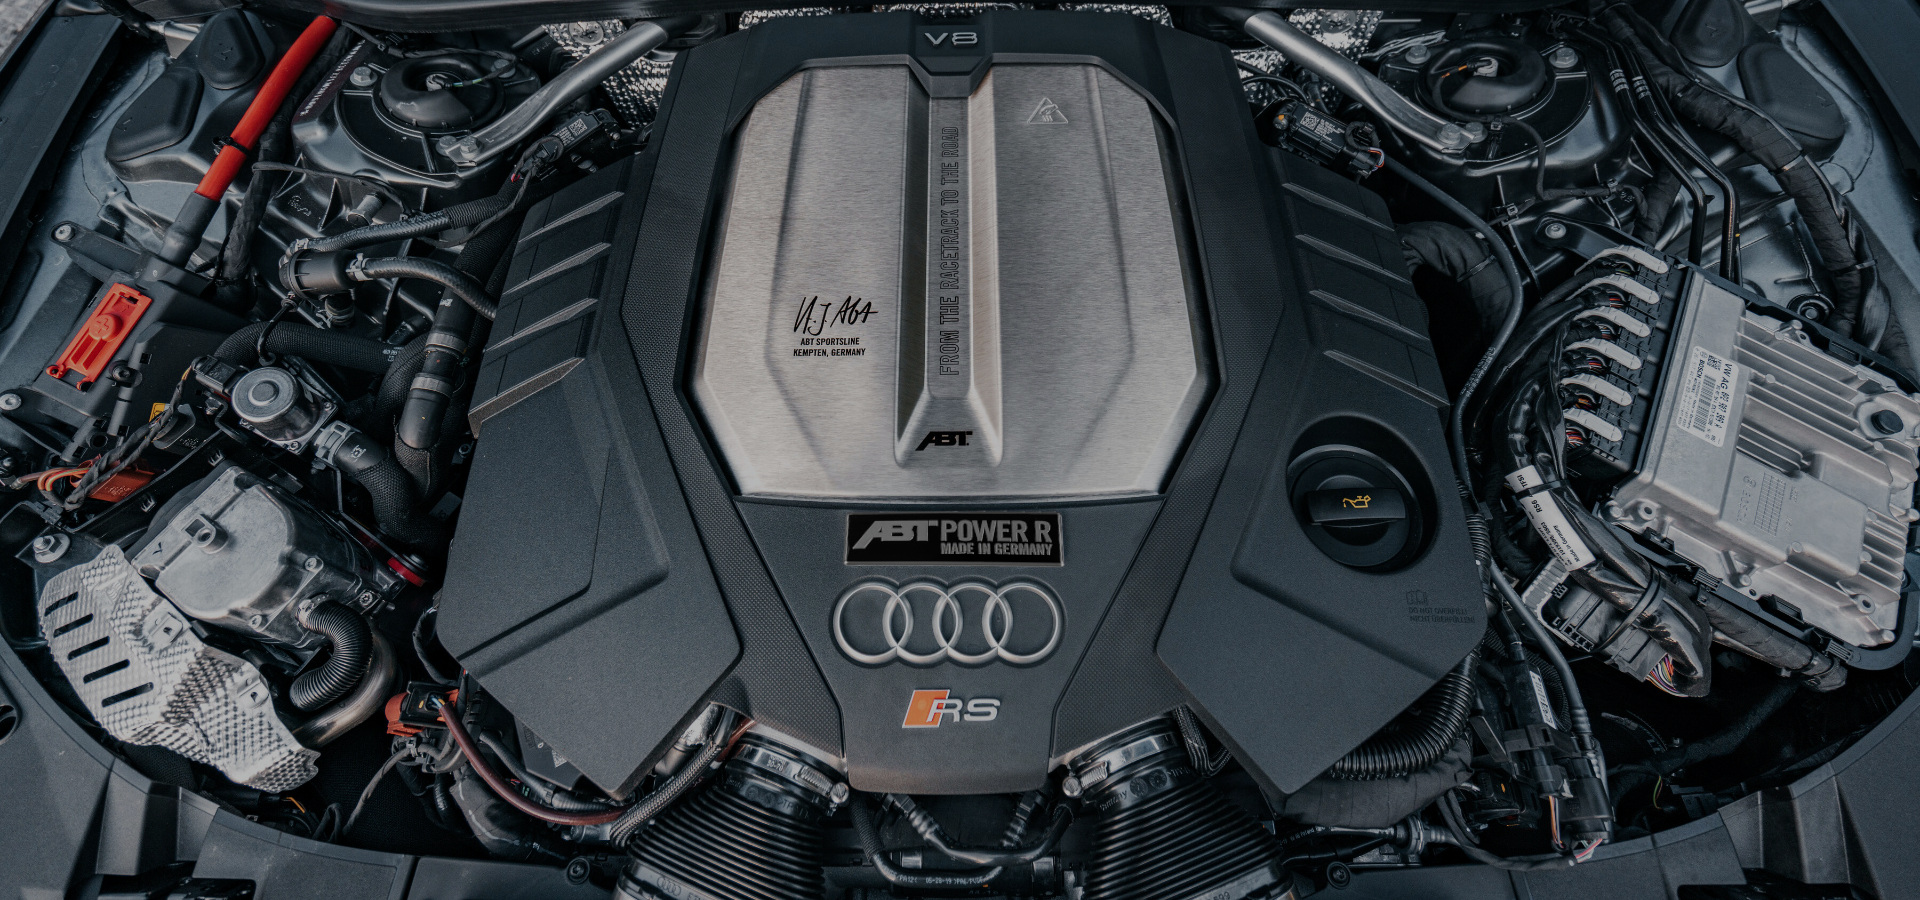 Seat Ateca - Audi Tuning, VW Tuning, Chiptuning von ABT Sportsline.